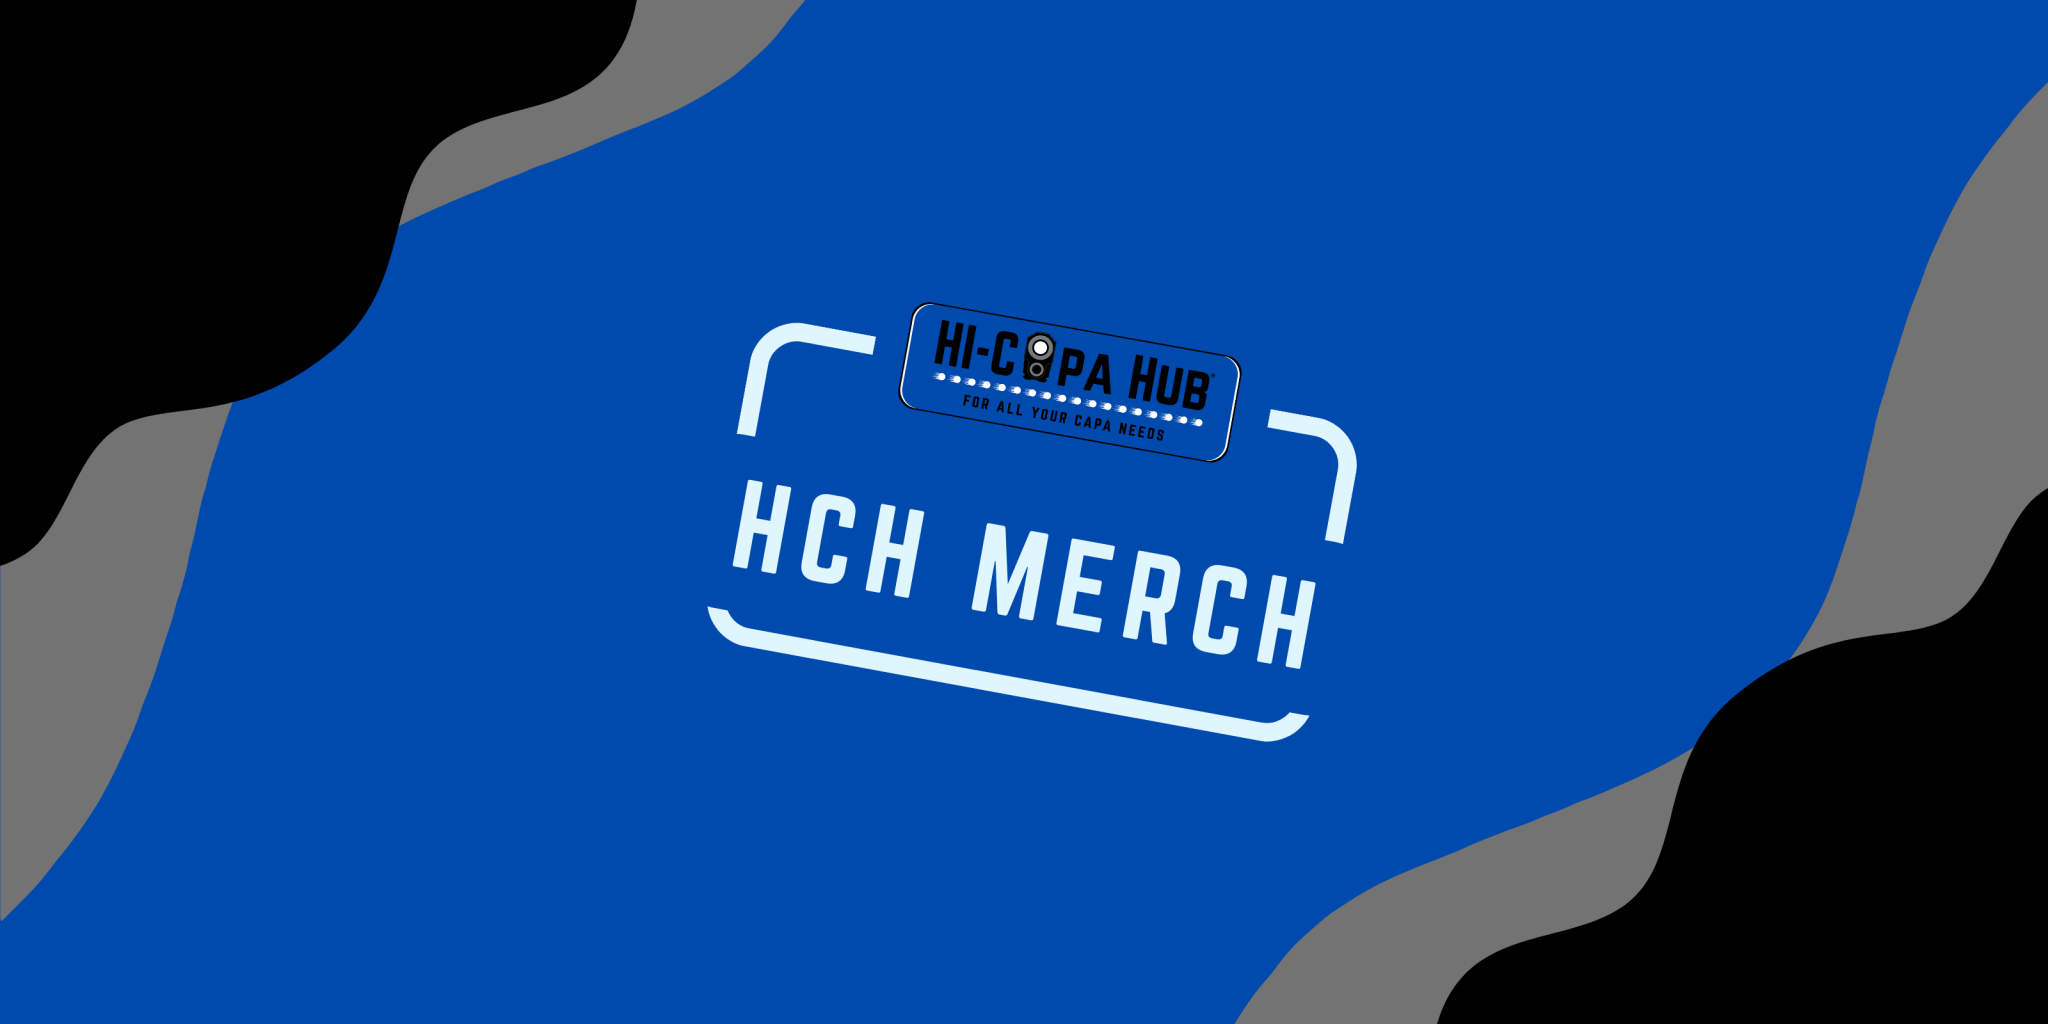 HCH Merch - Hi-Capa Hub Ltd